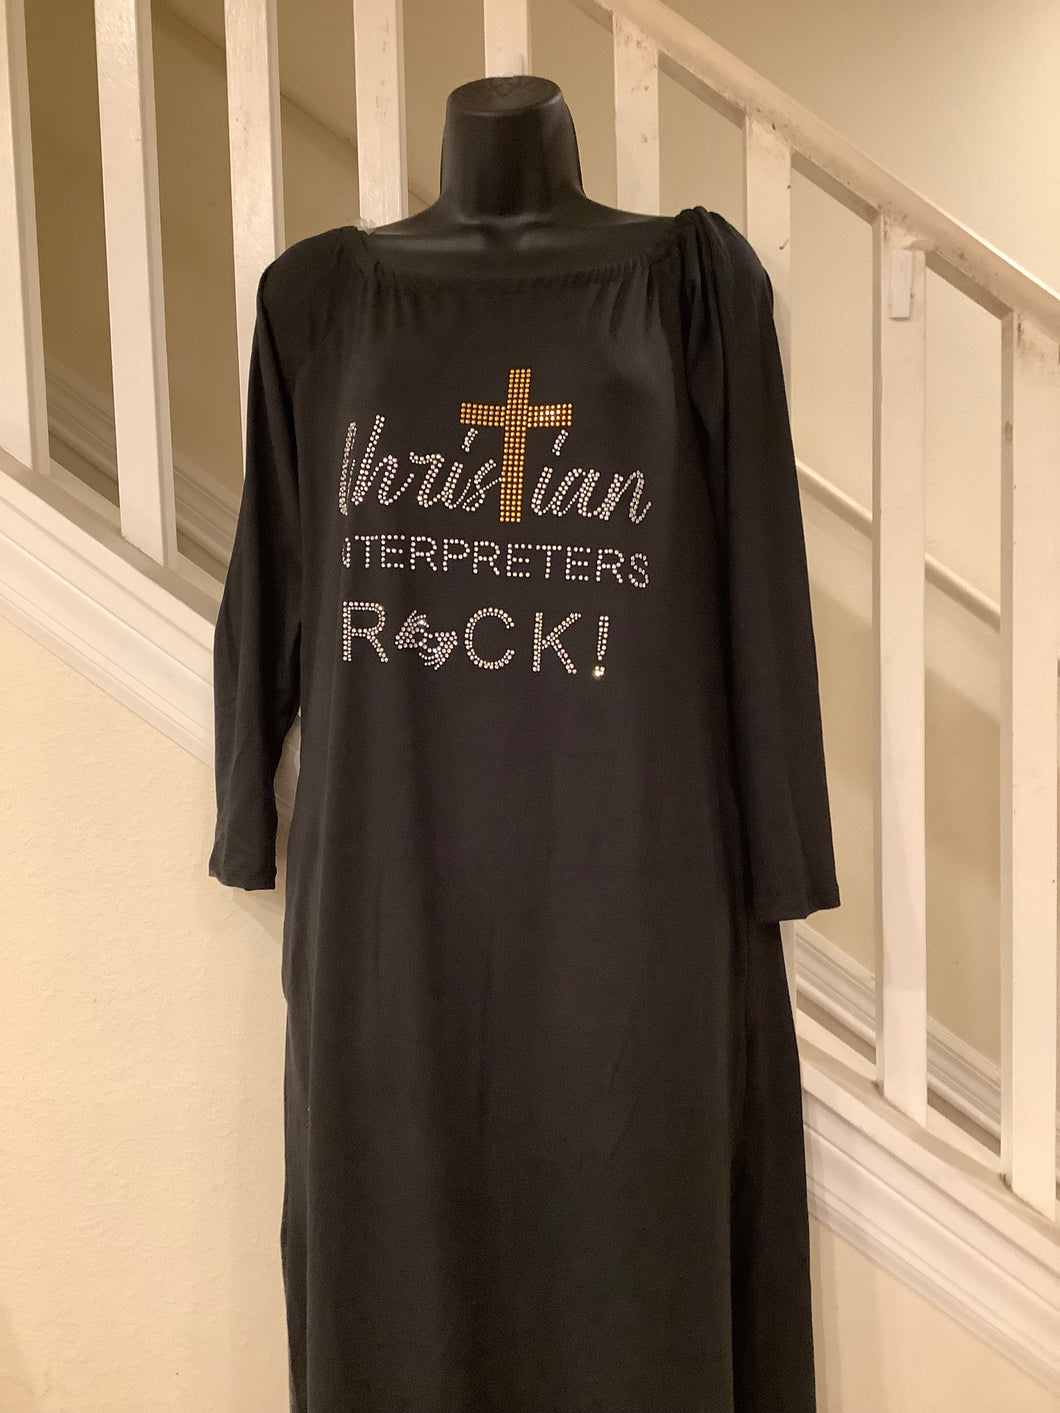 Long Sleeve Dress (w/pockets) Christian Interpreters Rock